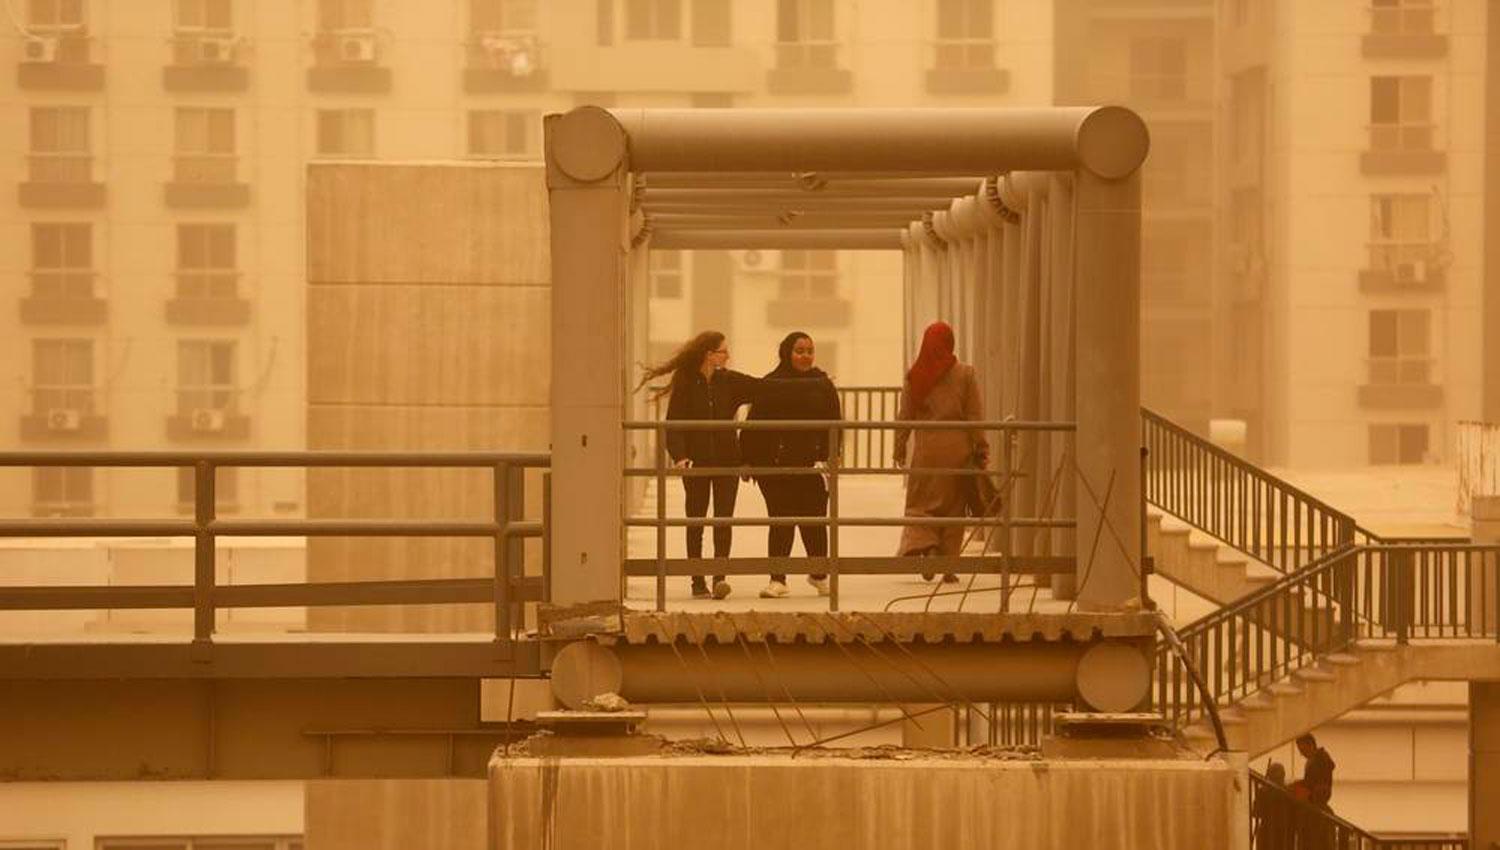 NARANJA. La tormenta de arena dejó pintada de naranja a El Cairo y otras ciudades portuarias de Egipto.